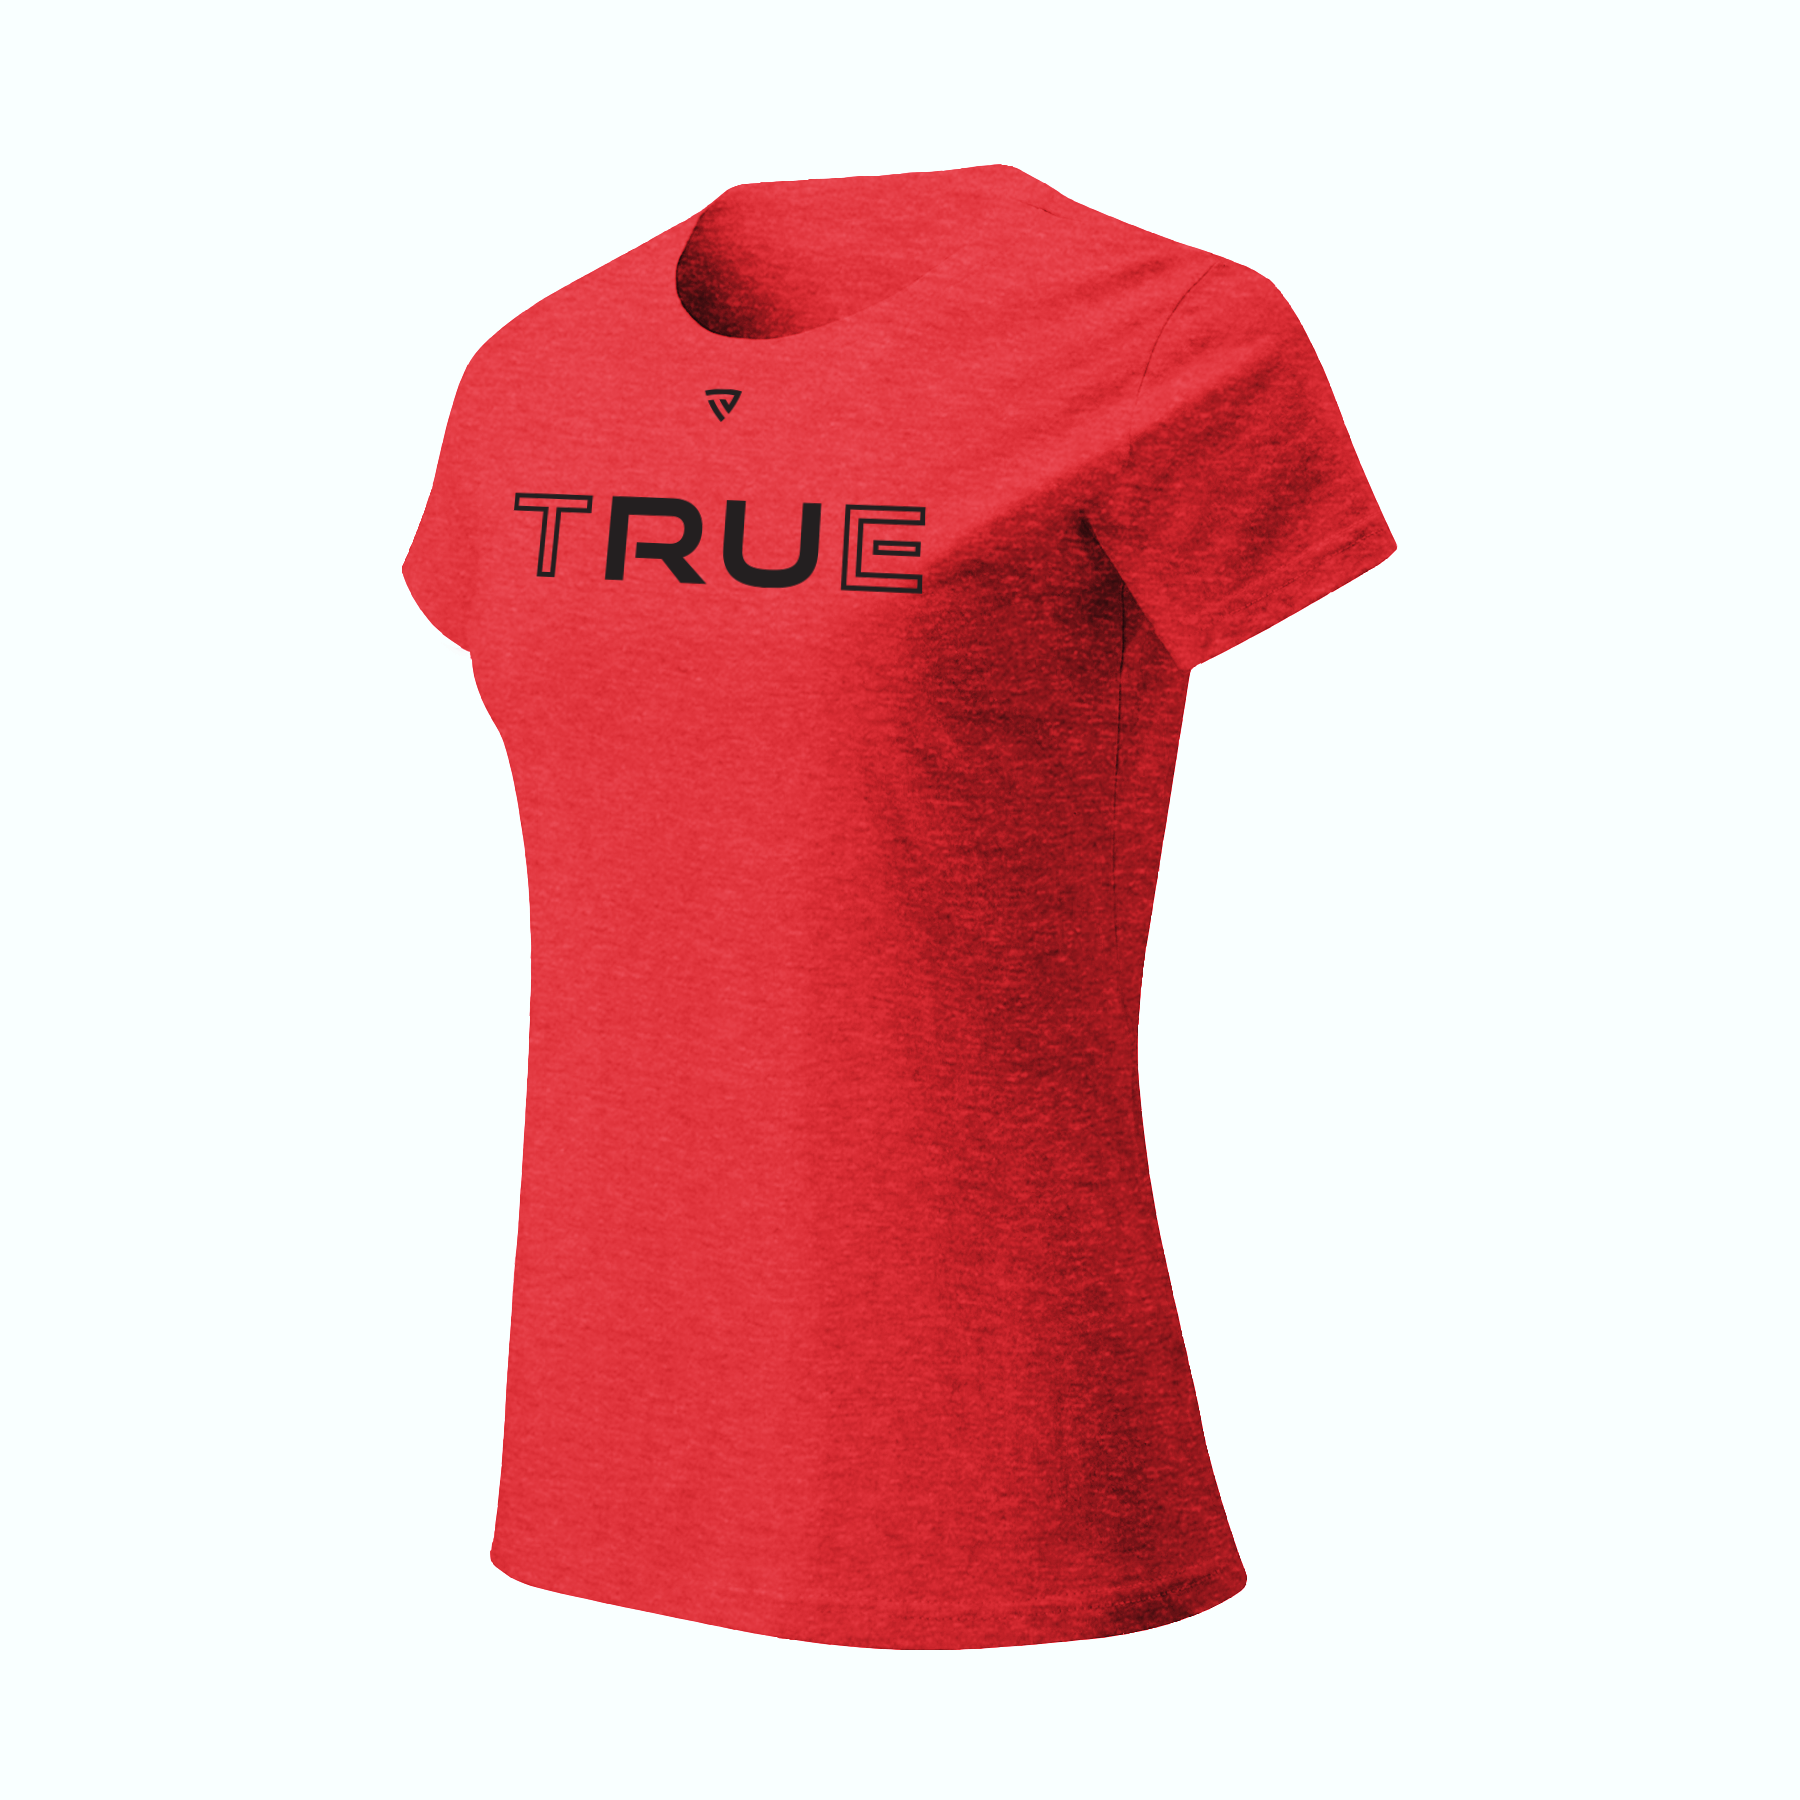 Women's RU TRUE Red Tee